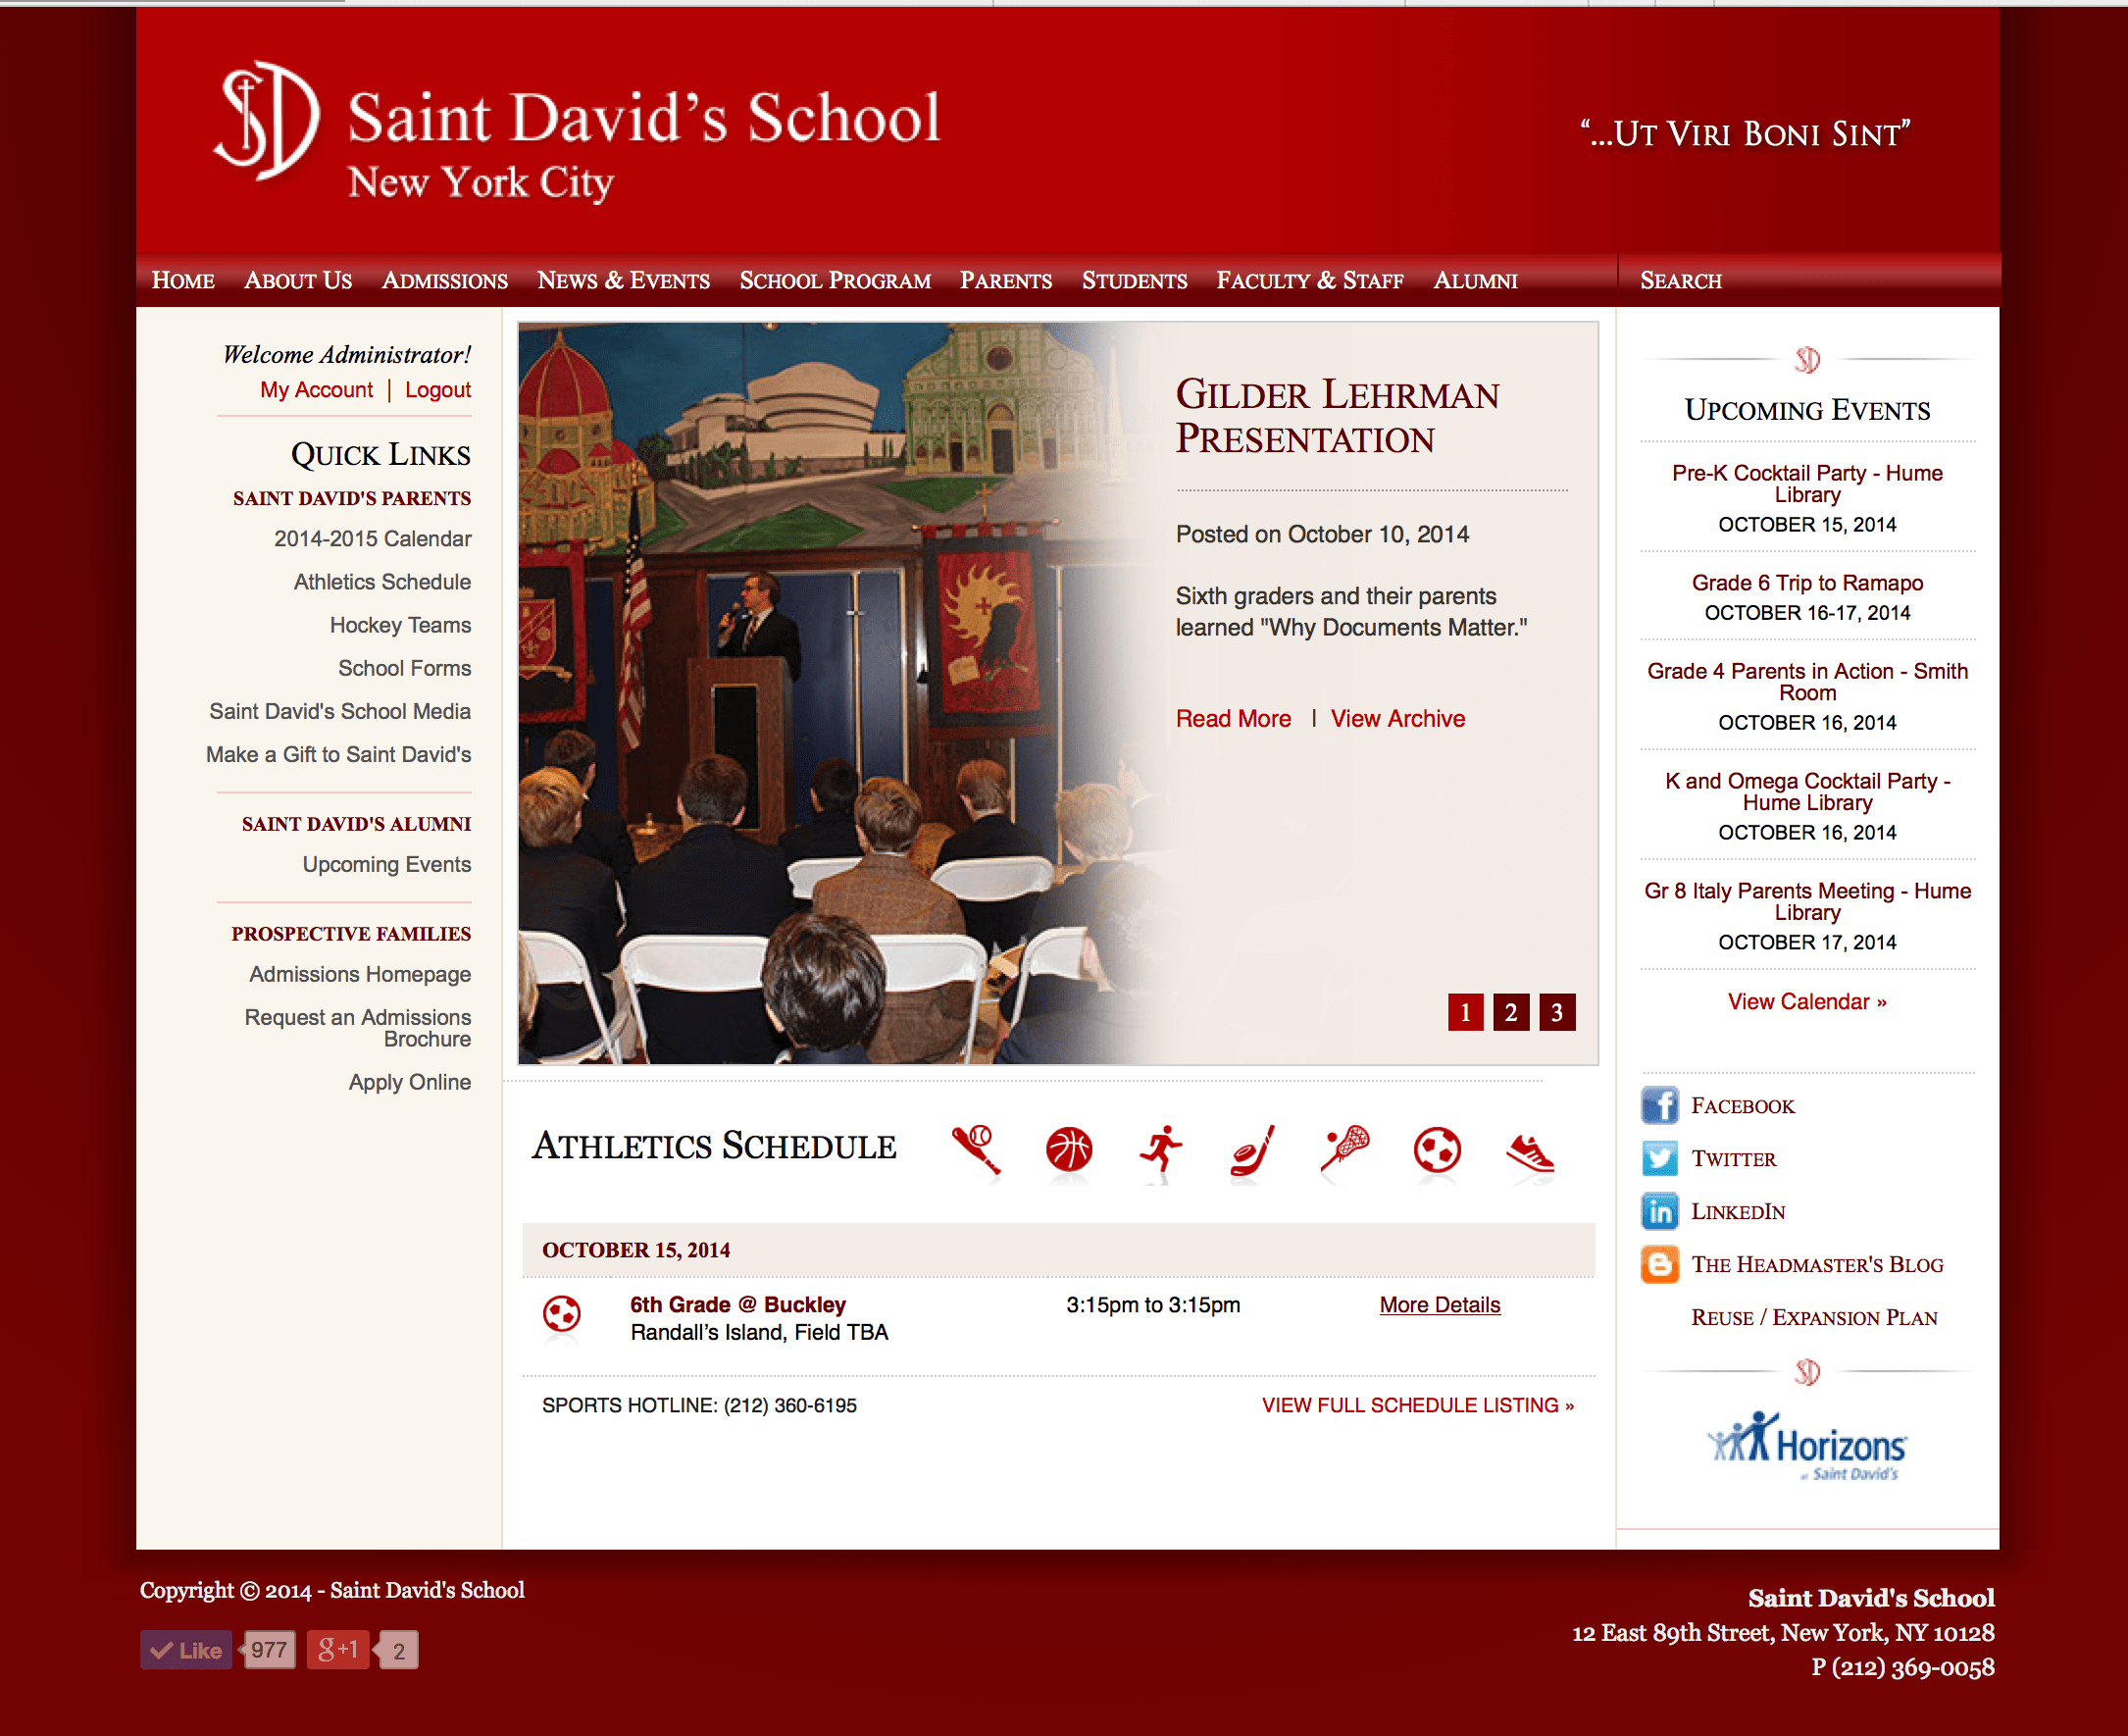 Previous Saint David's School Website